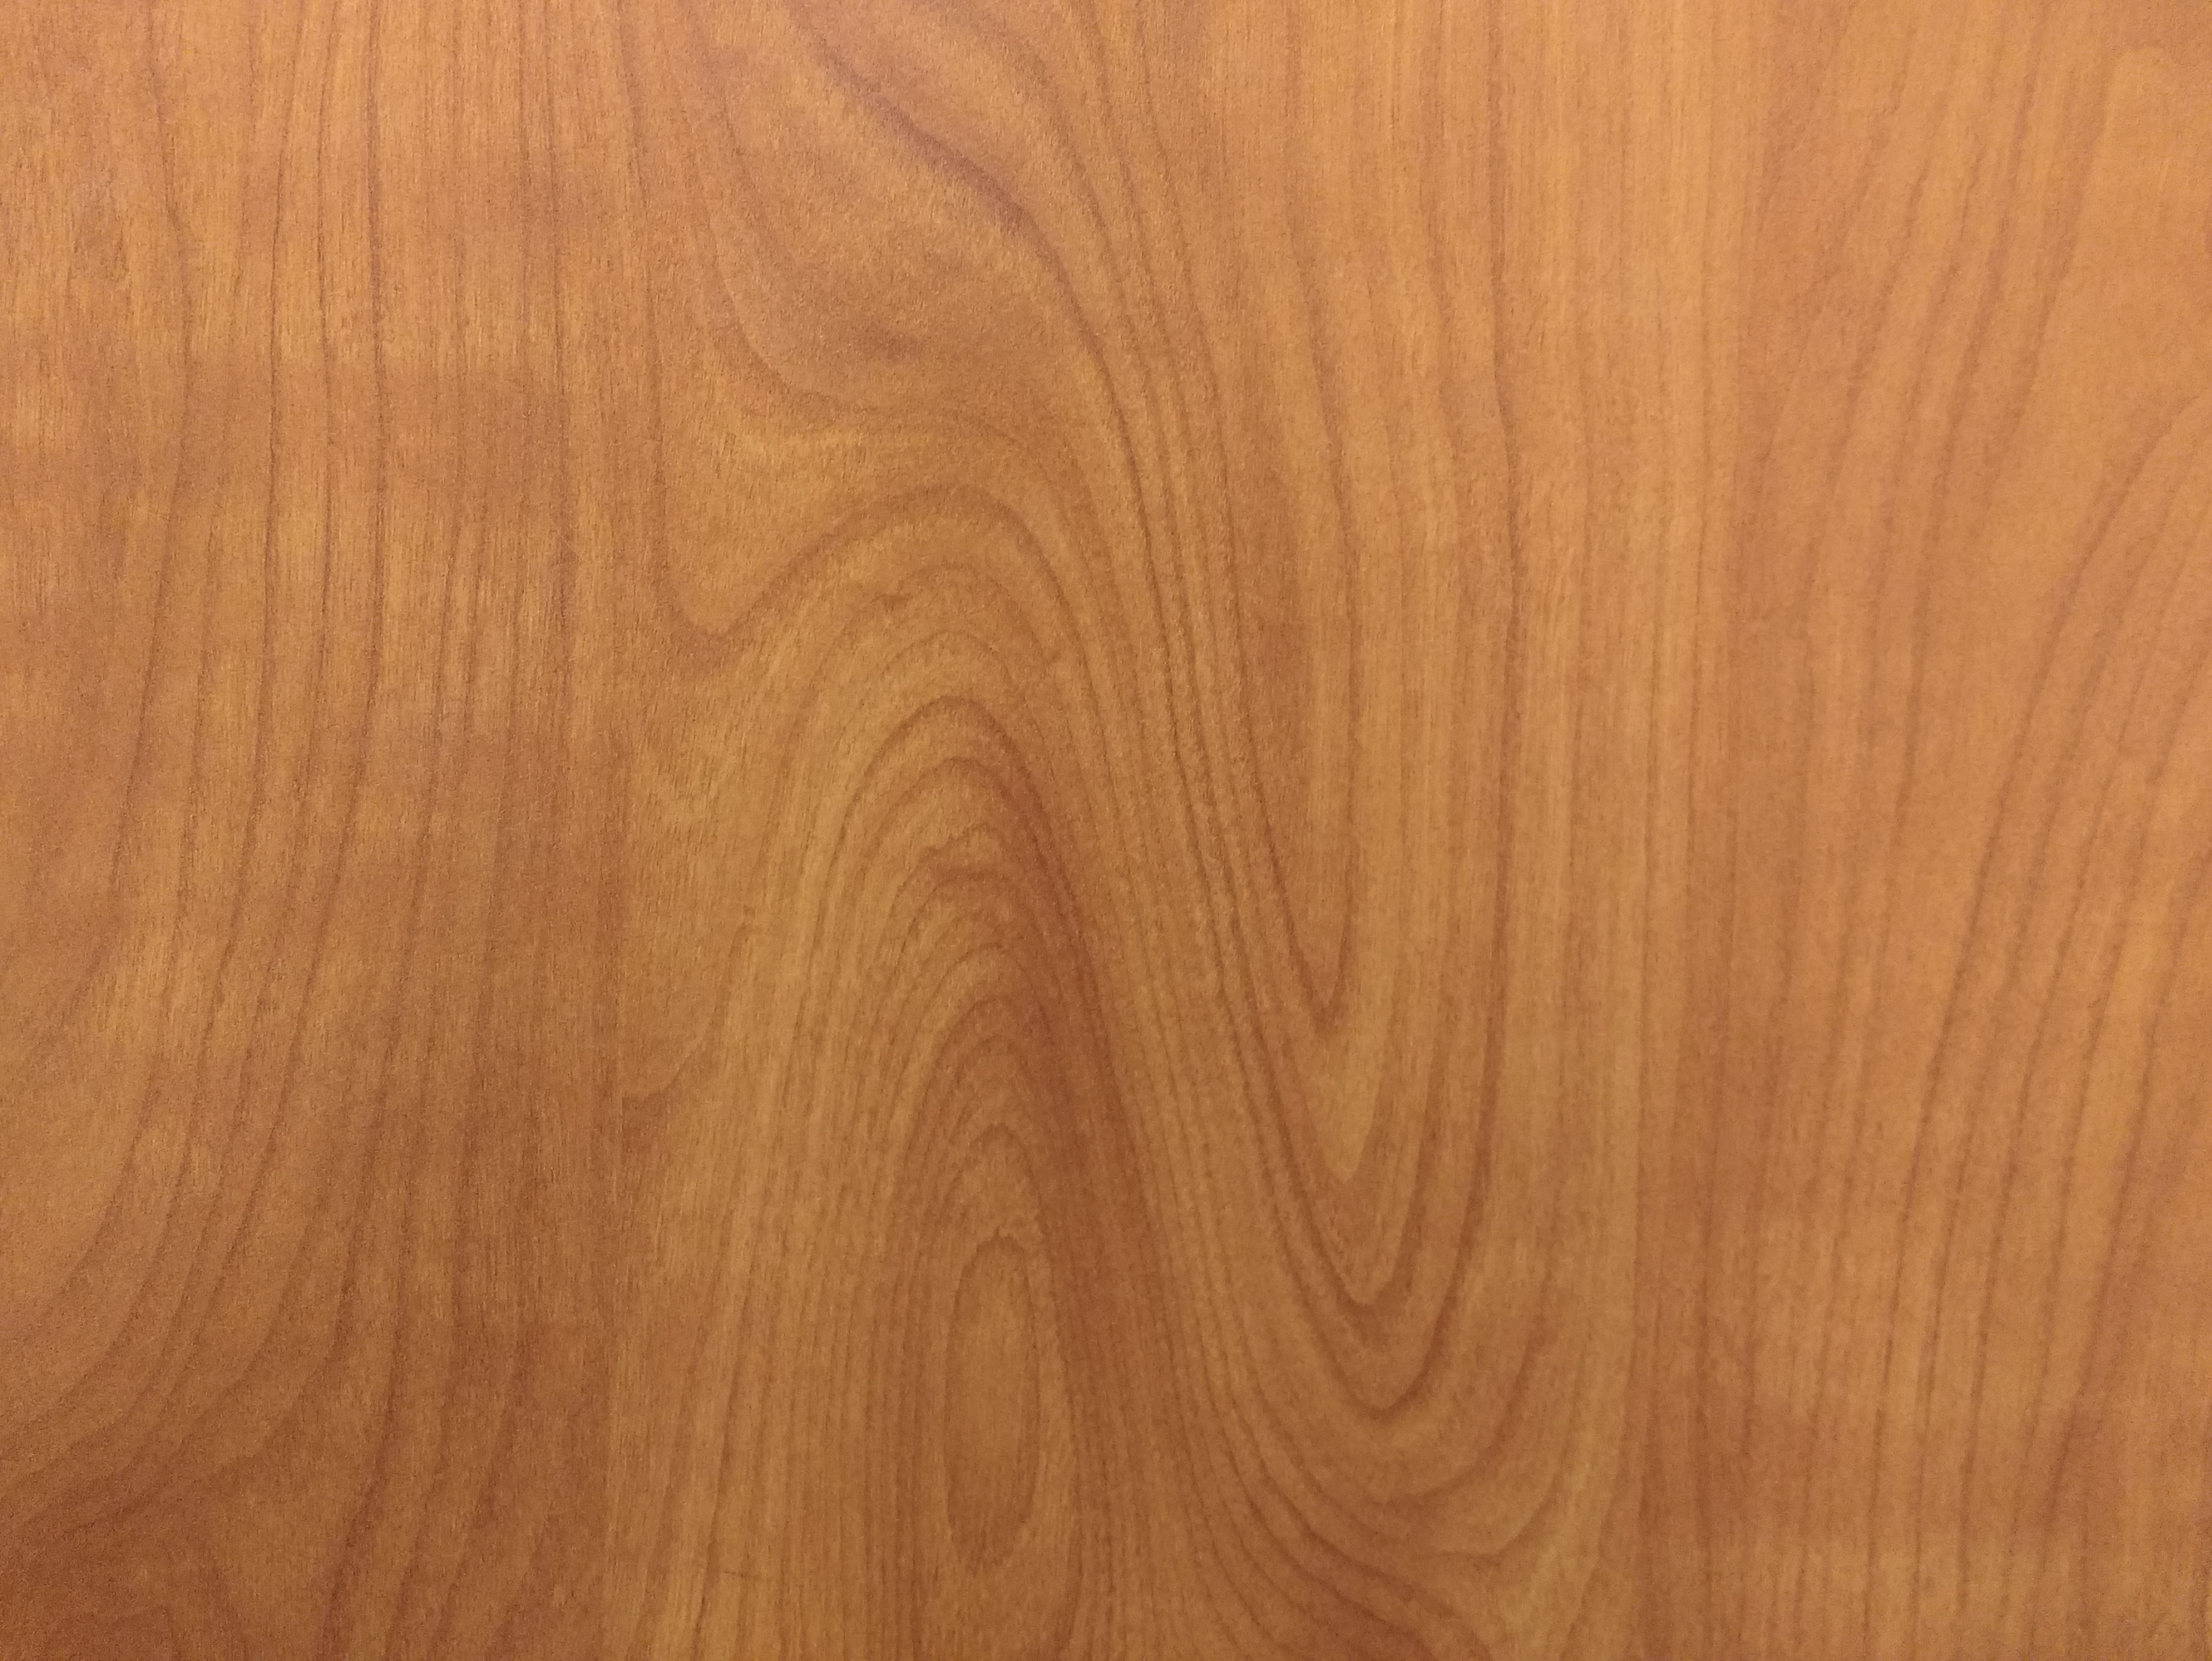 wood showing its undulating grain